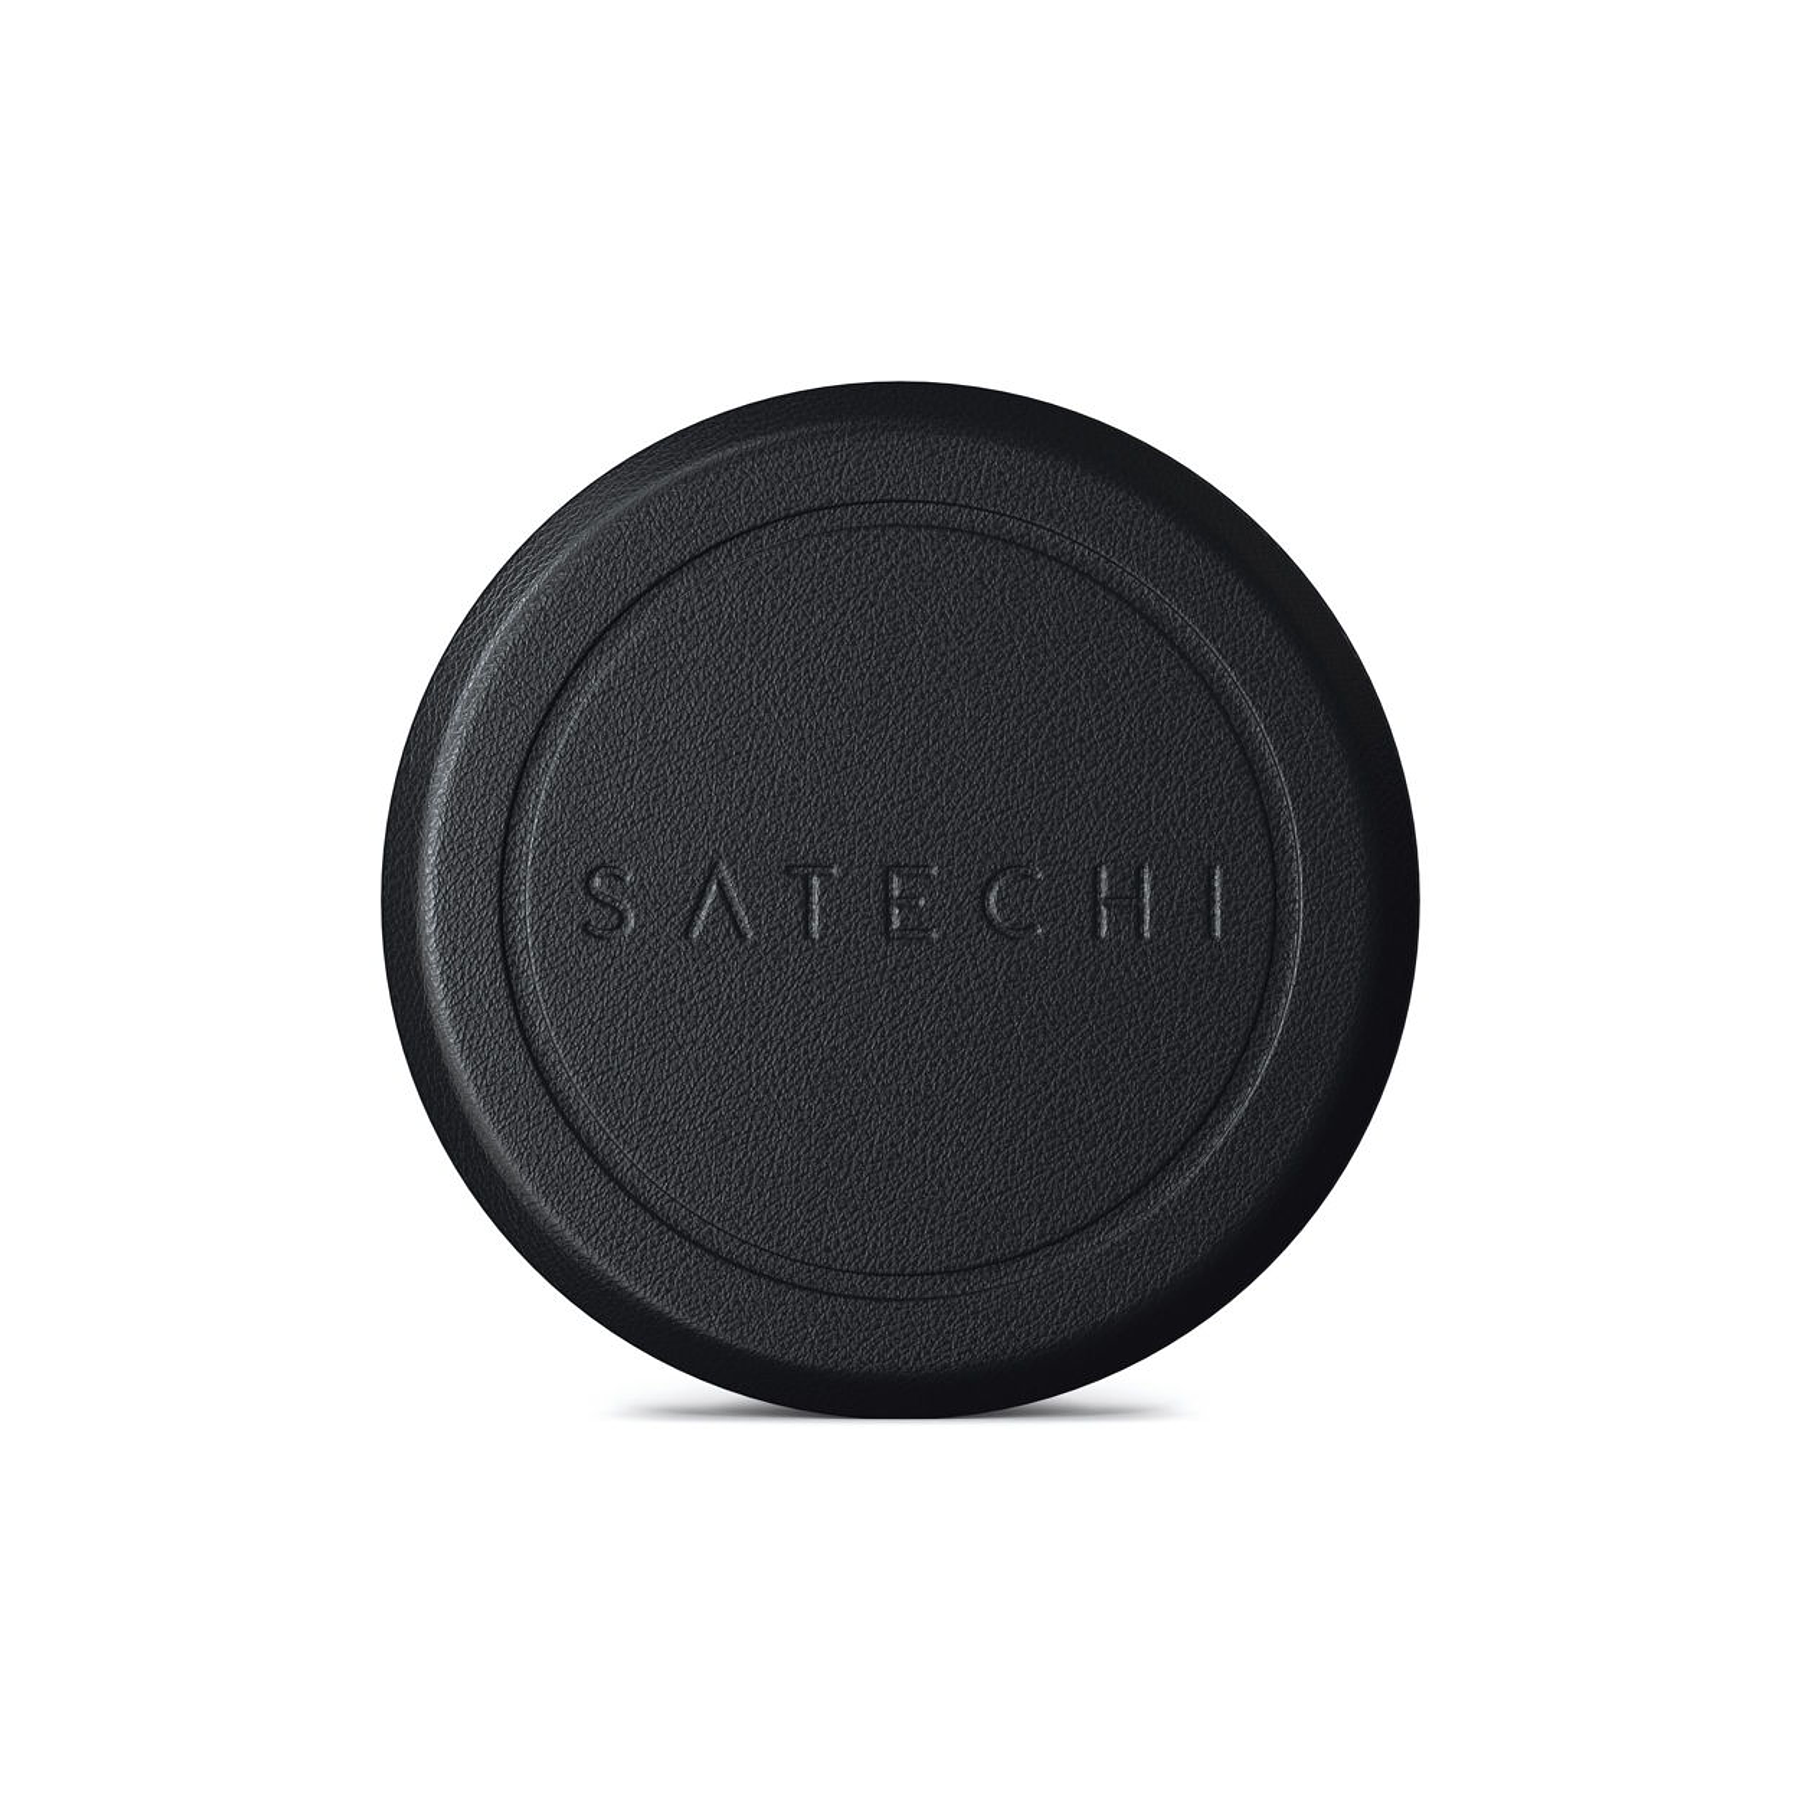 Satechi - Magnetic Sticker (black)   